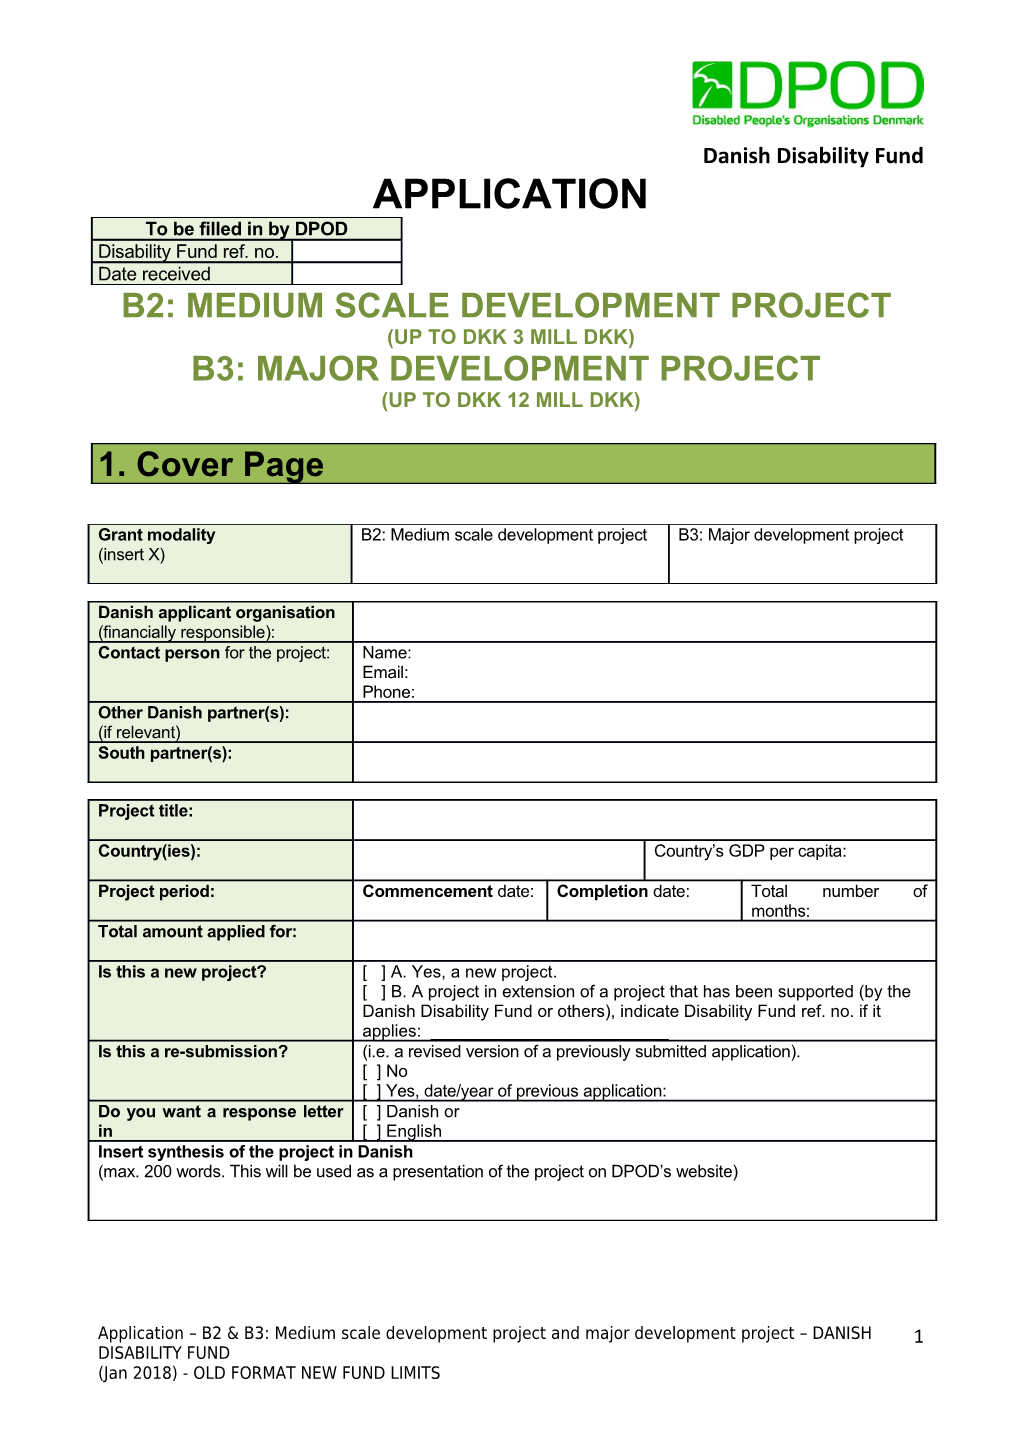 B2: Medium Scale Development Project